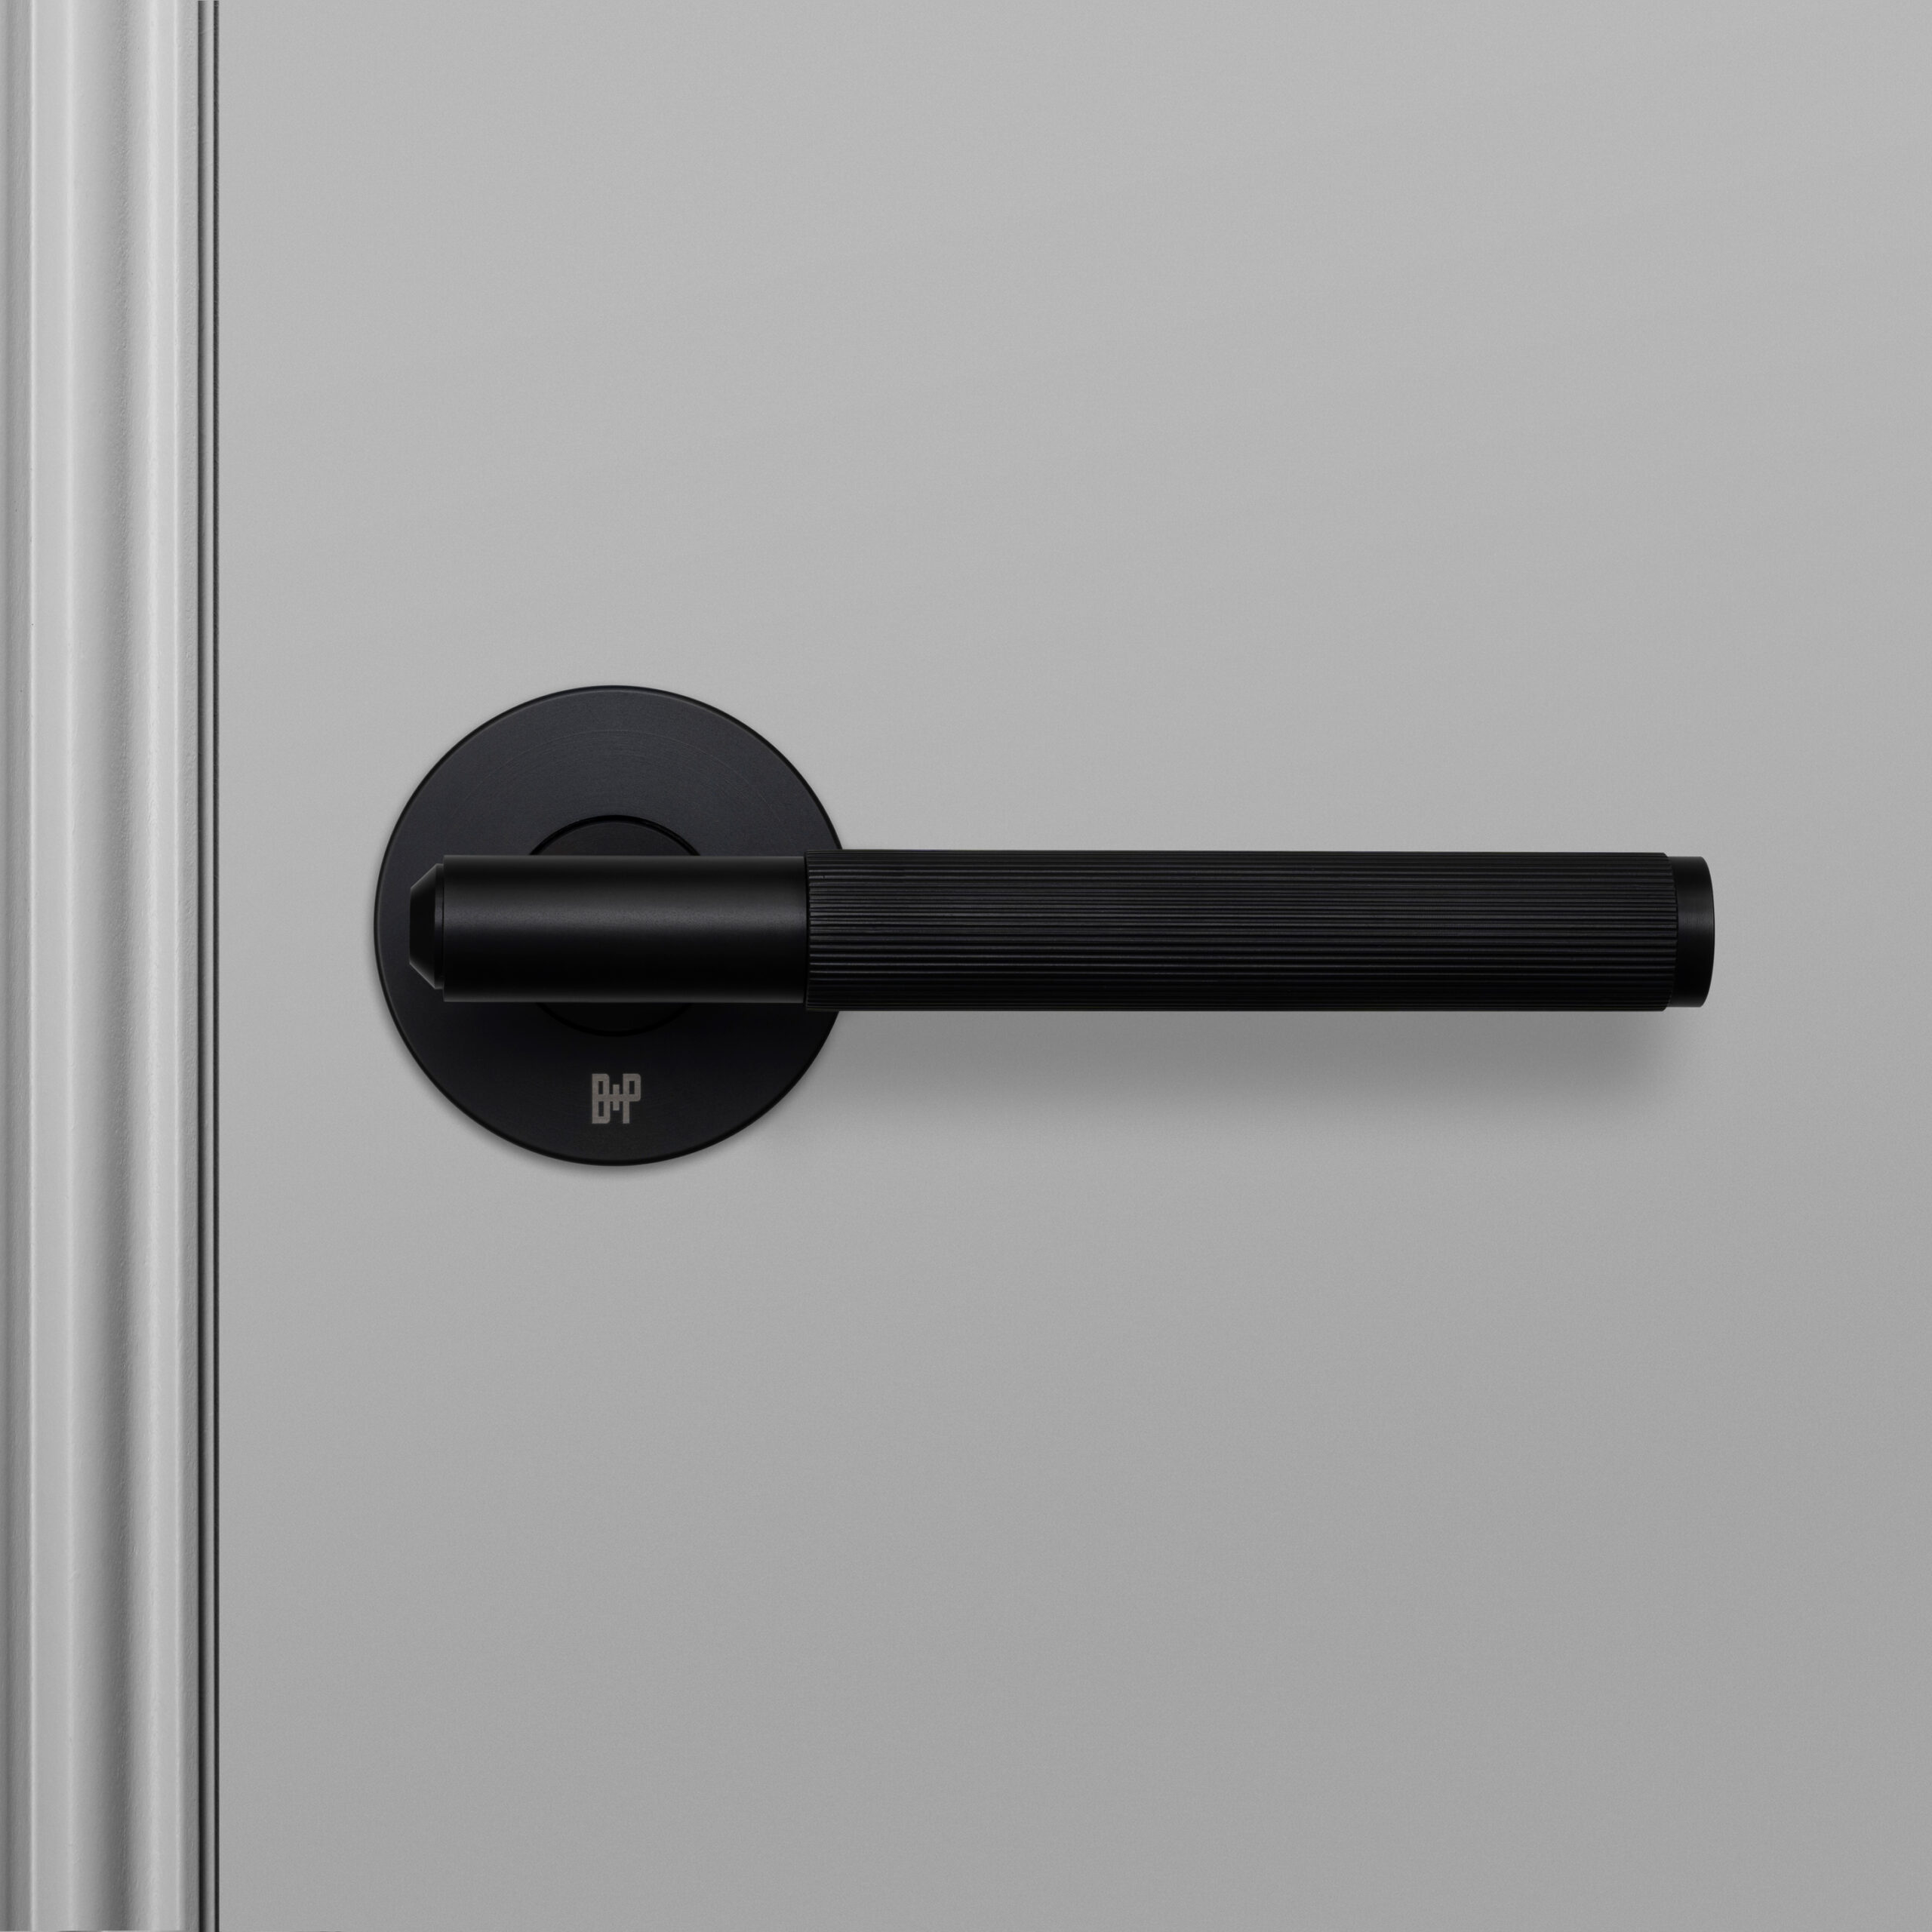 Door-handle_Fixed_Linear_Welders-Black_A2_Web_Square